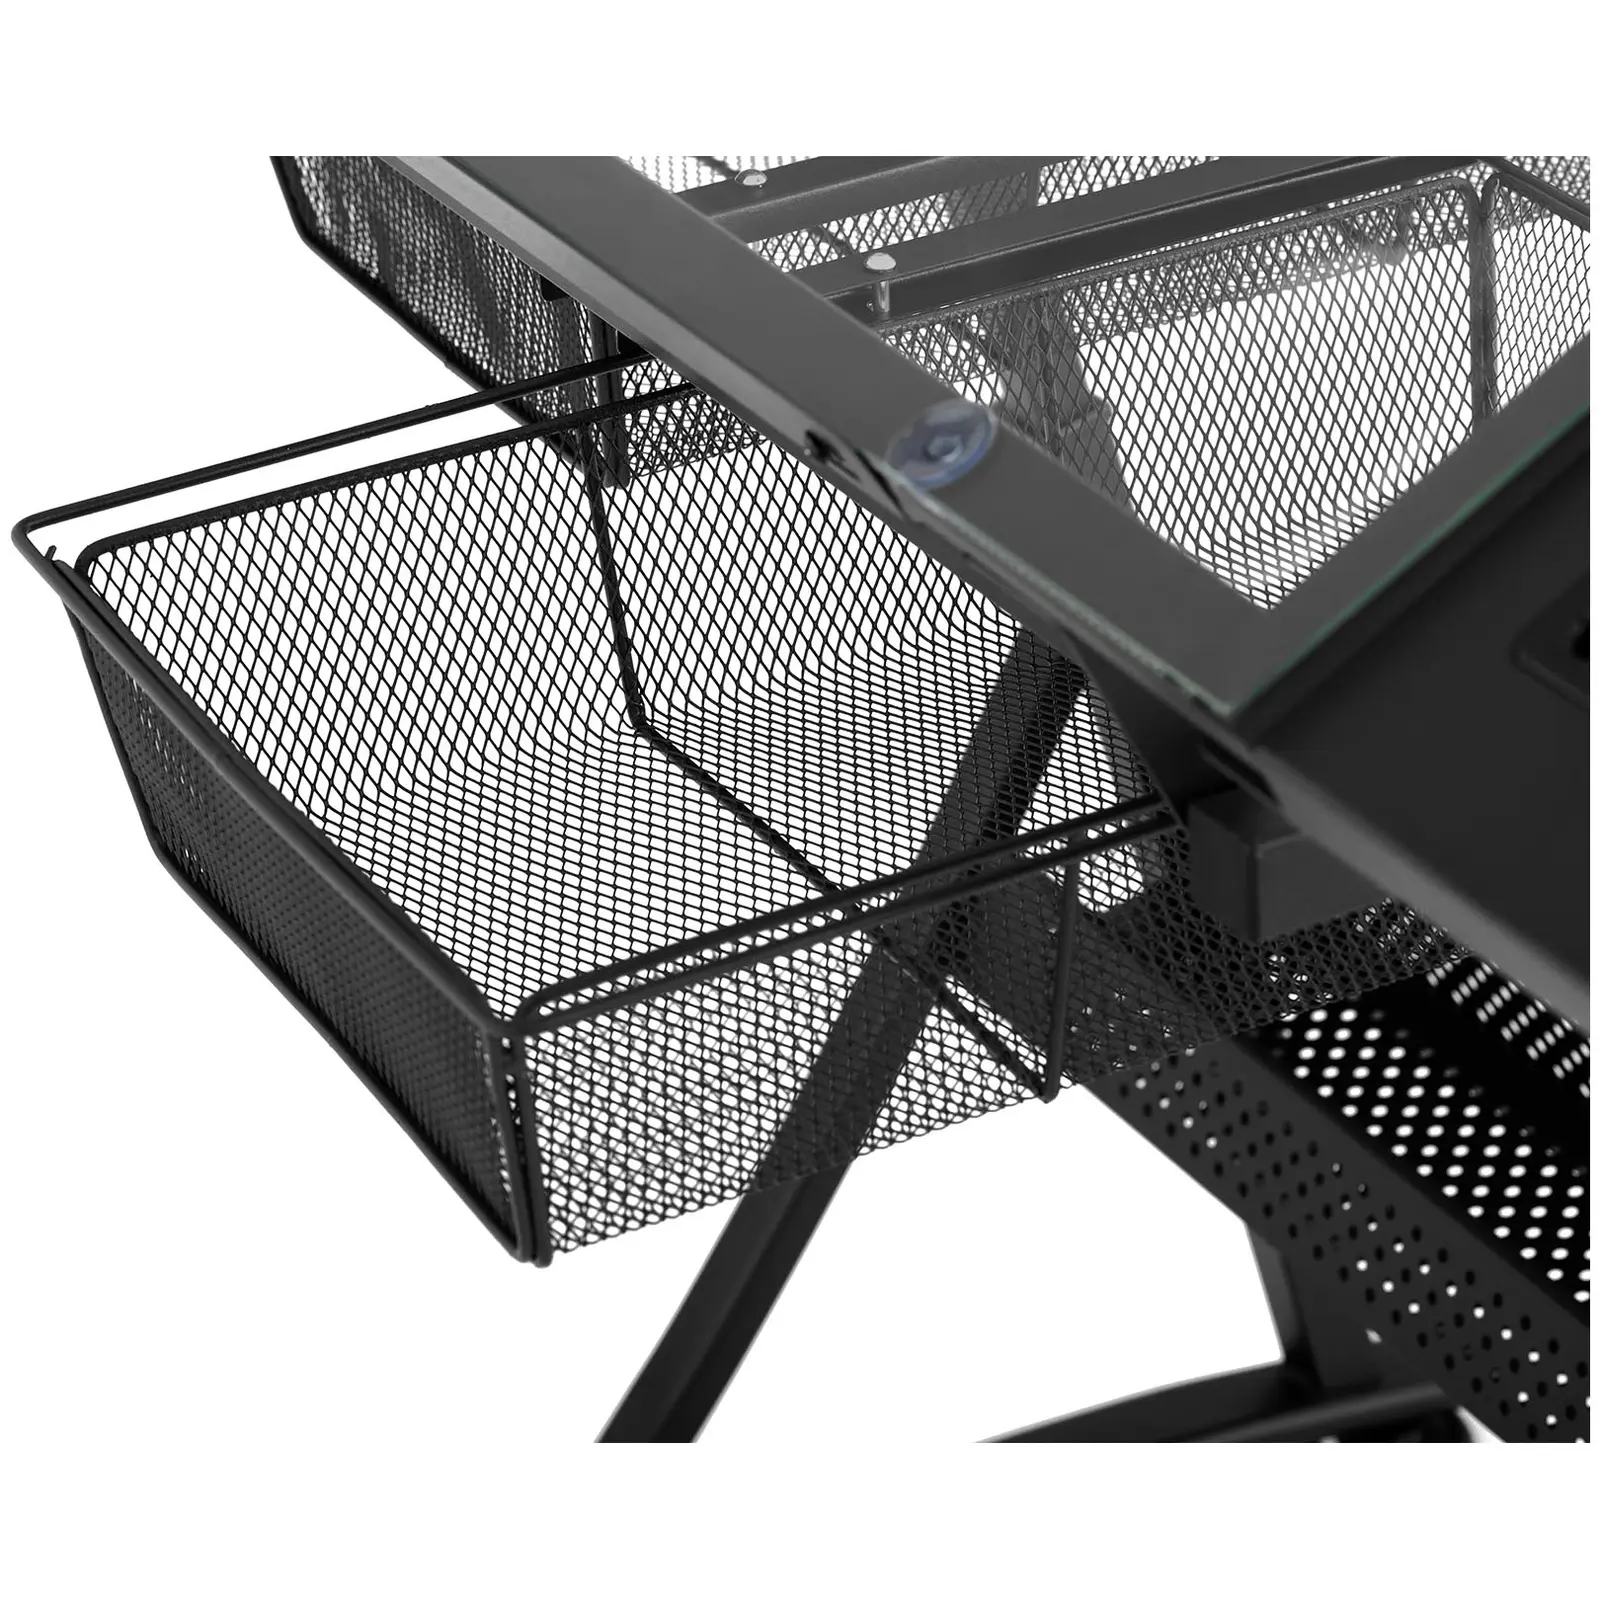 Drafting Desk - 120 x 60 x 90 cm - tiltable - glass top